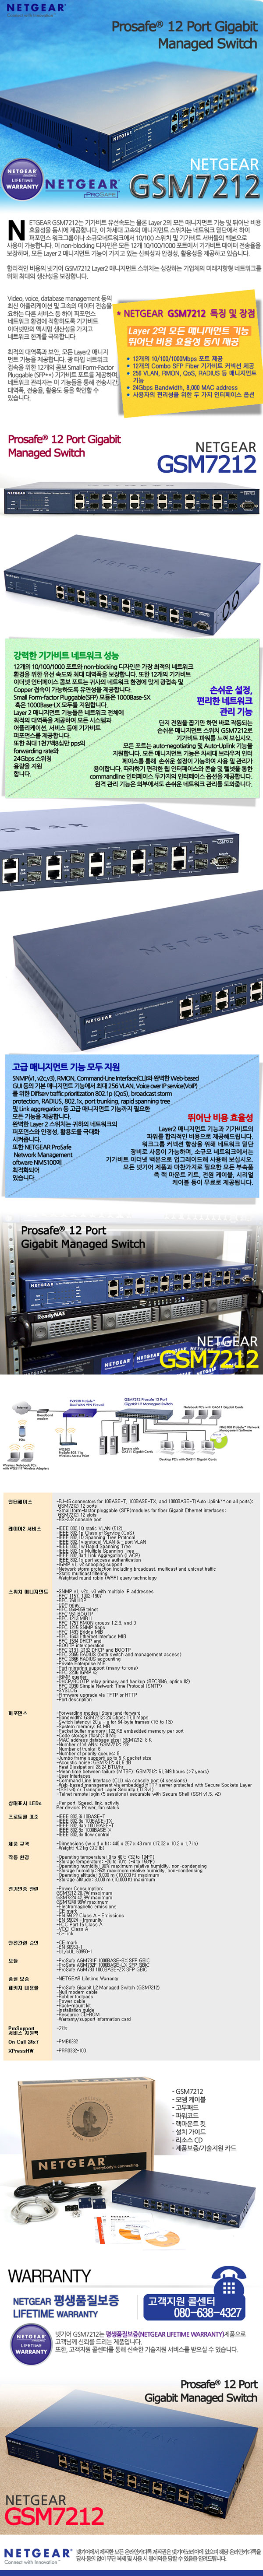 GSM7212(AA).jpg